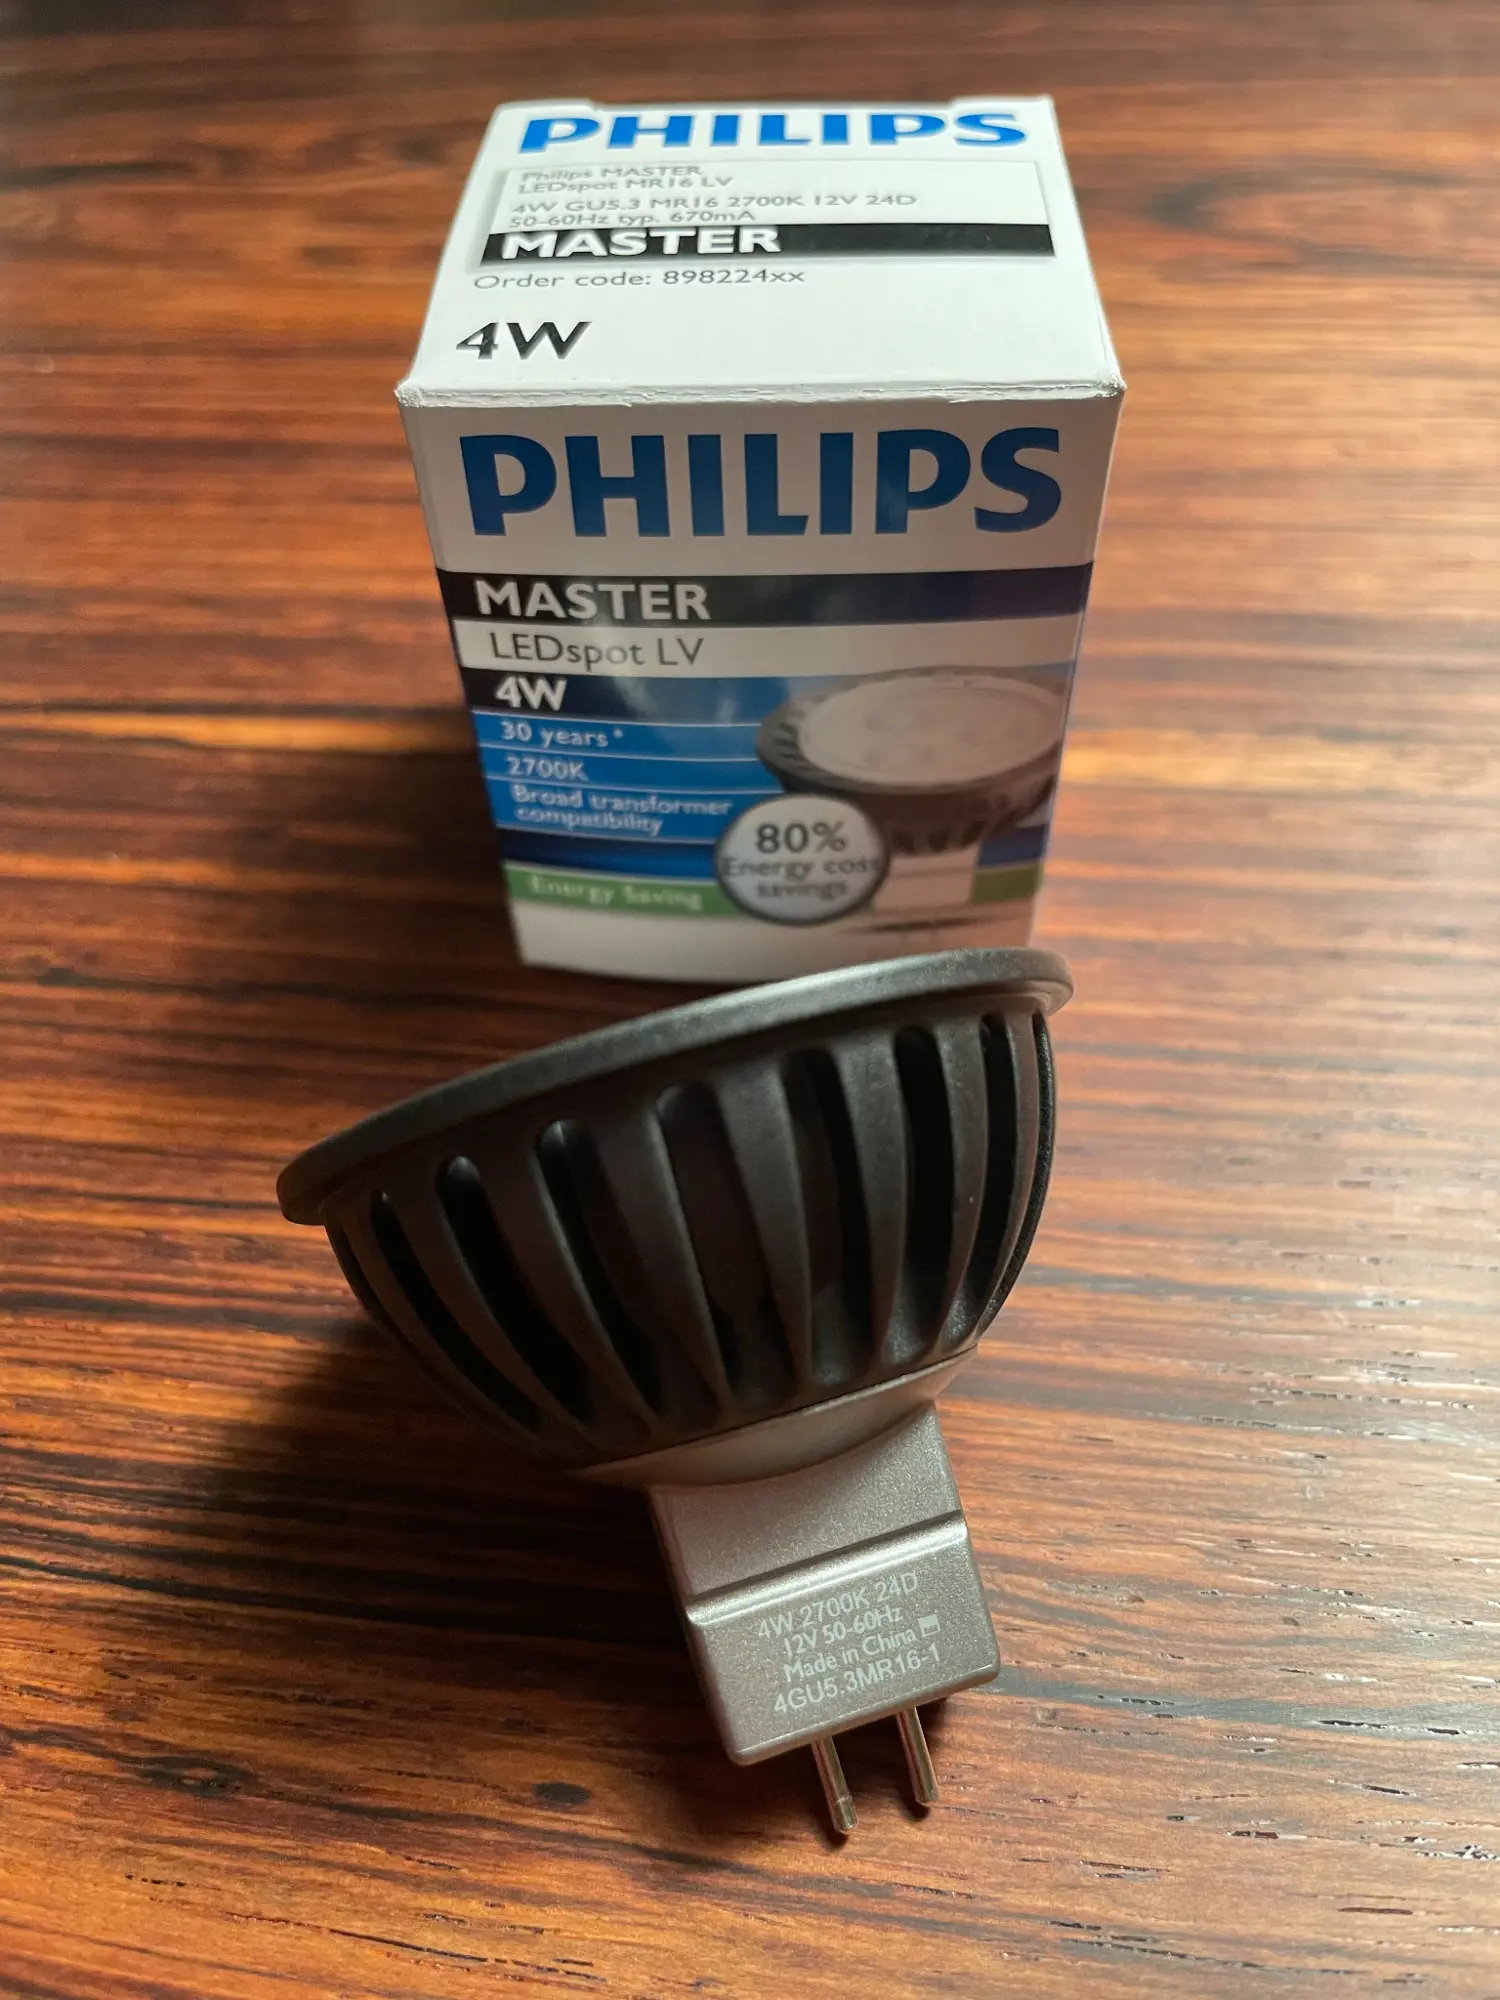 Philips anden belysning